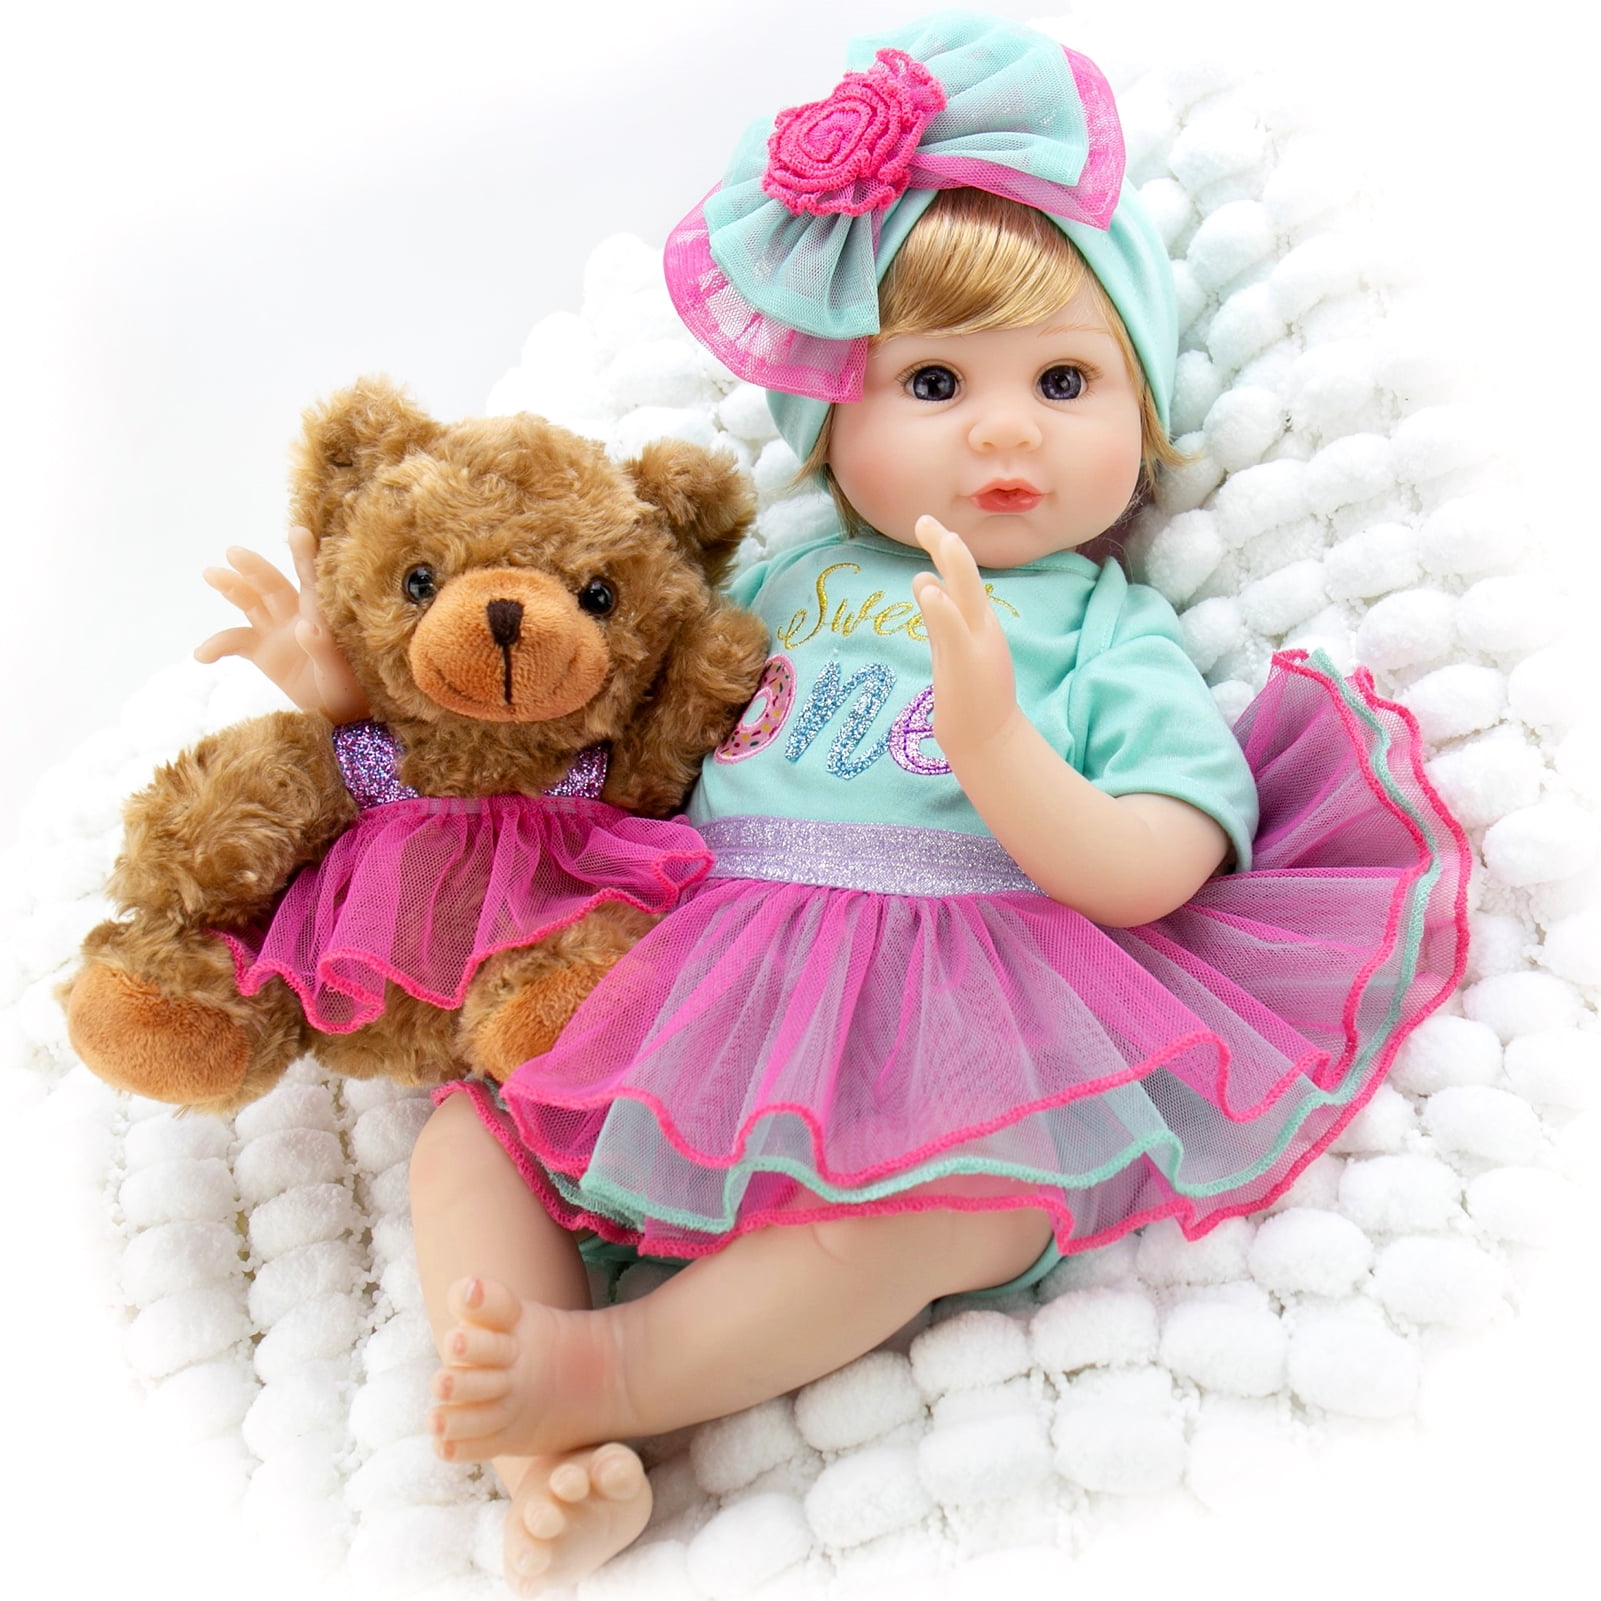 Realistic Newborn Baby Dolls 22 inch Lifelike Weighted Cloth Body Baby Dolls Girl with Duck Toy & Gift Box Milidool Reborn Baby Dolls 